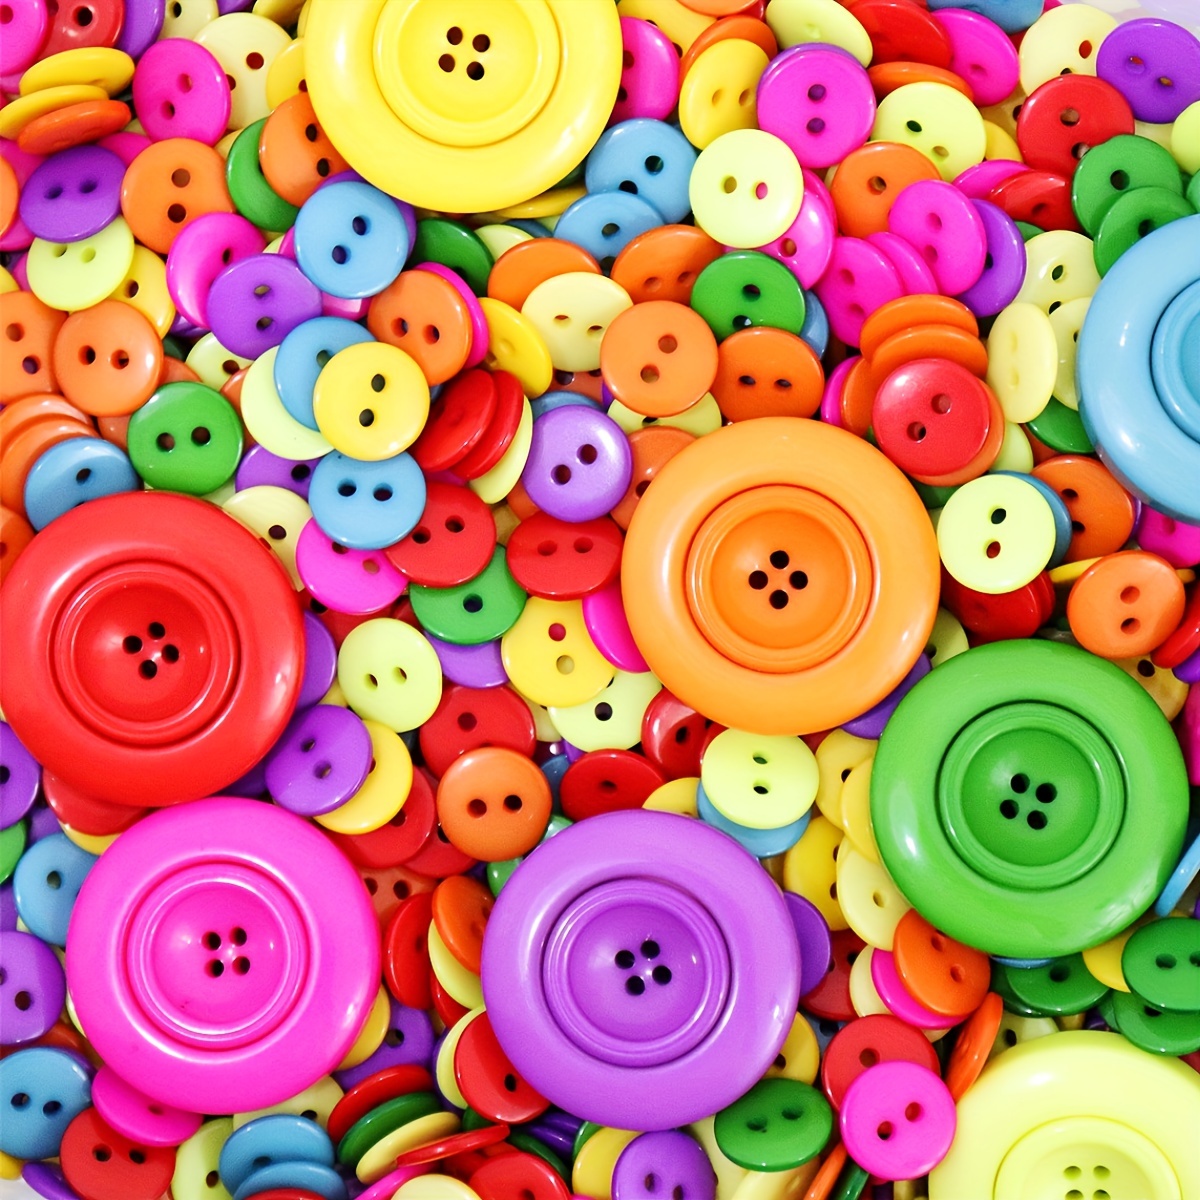 100pcs 2pcs multi color resin button sewing button clothing diy accessories button